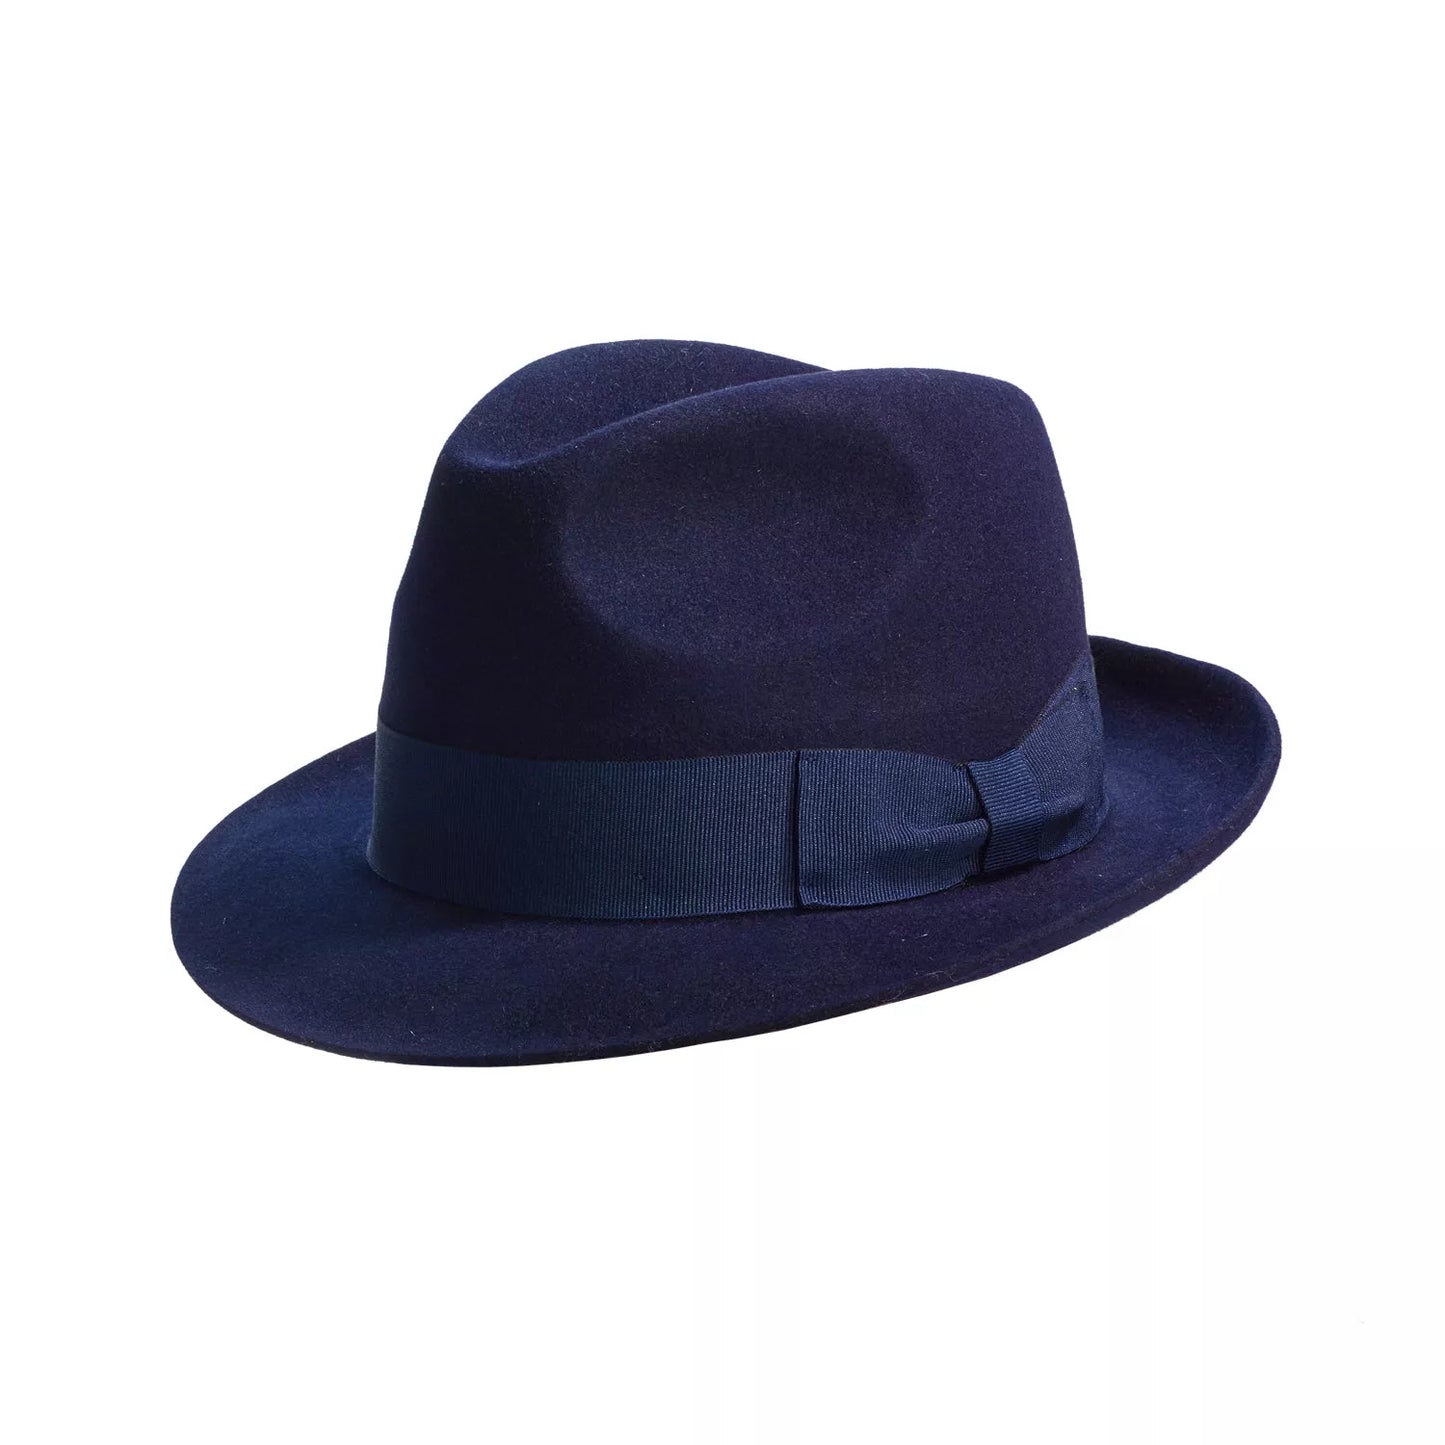 Sombrero Sinatra Trilby